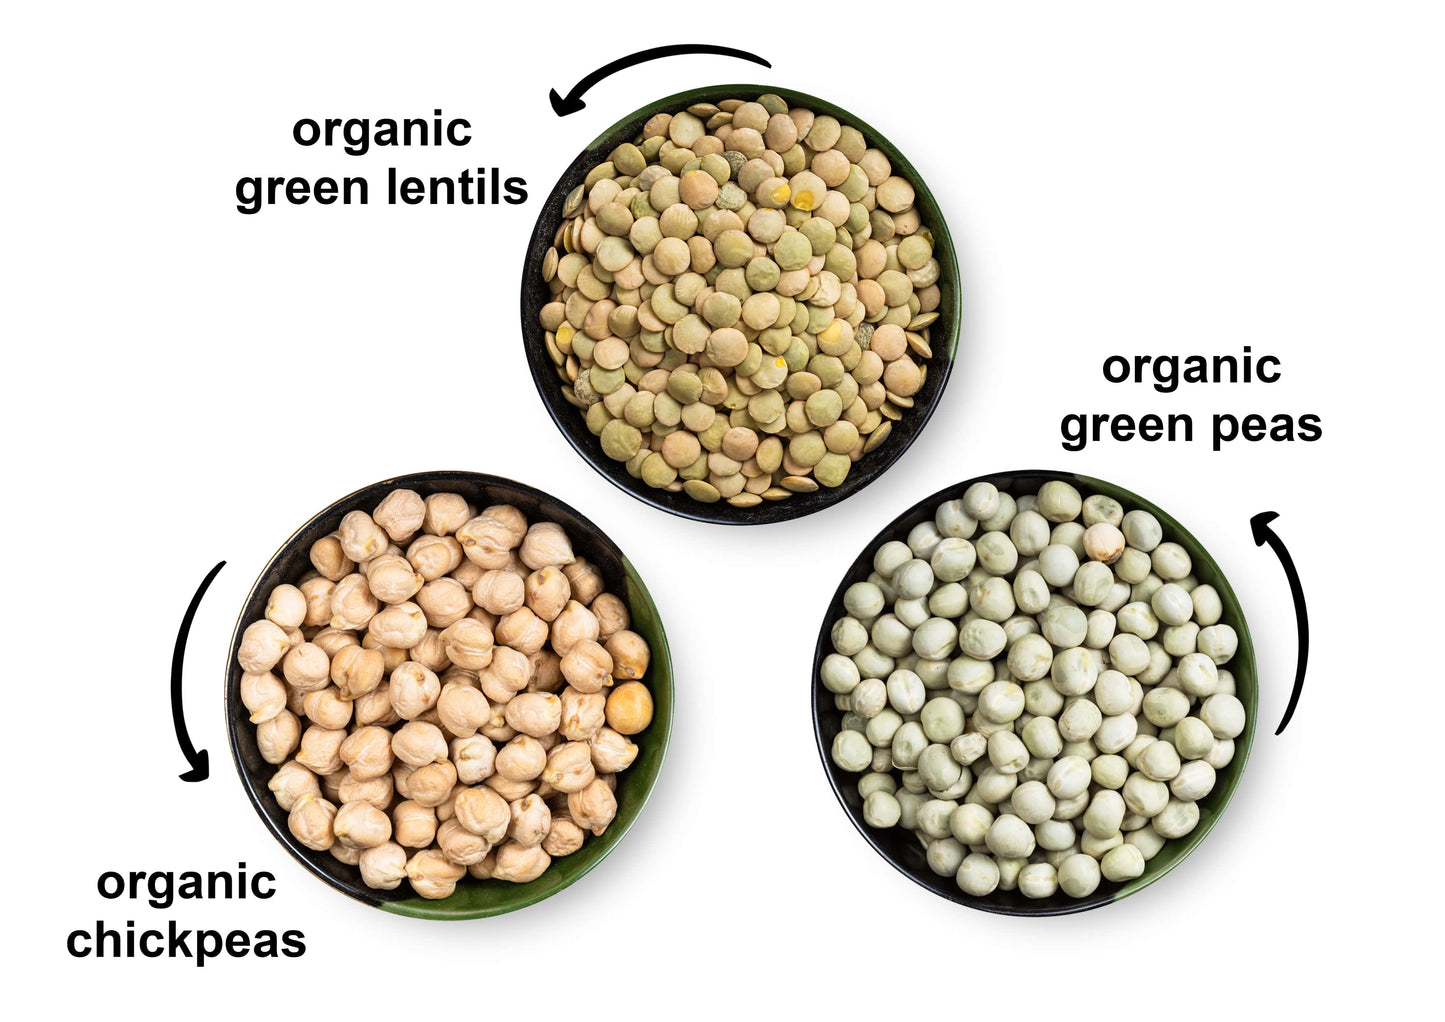 Organic Pulses Bundle, 3 Pack – Organic Whole Green Peas (5 LB), Organic Green Lentils (5 LB), Organic Chickpeas (5 LB), Non-GMO Dried Legumes, Raw, Vegan, Kosher, Bulk. Rich in Fiber and Protein